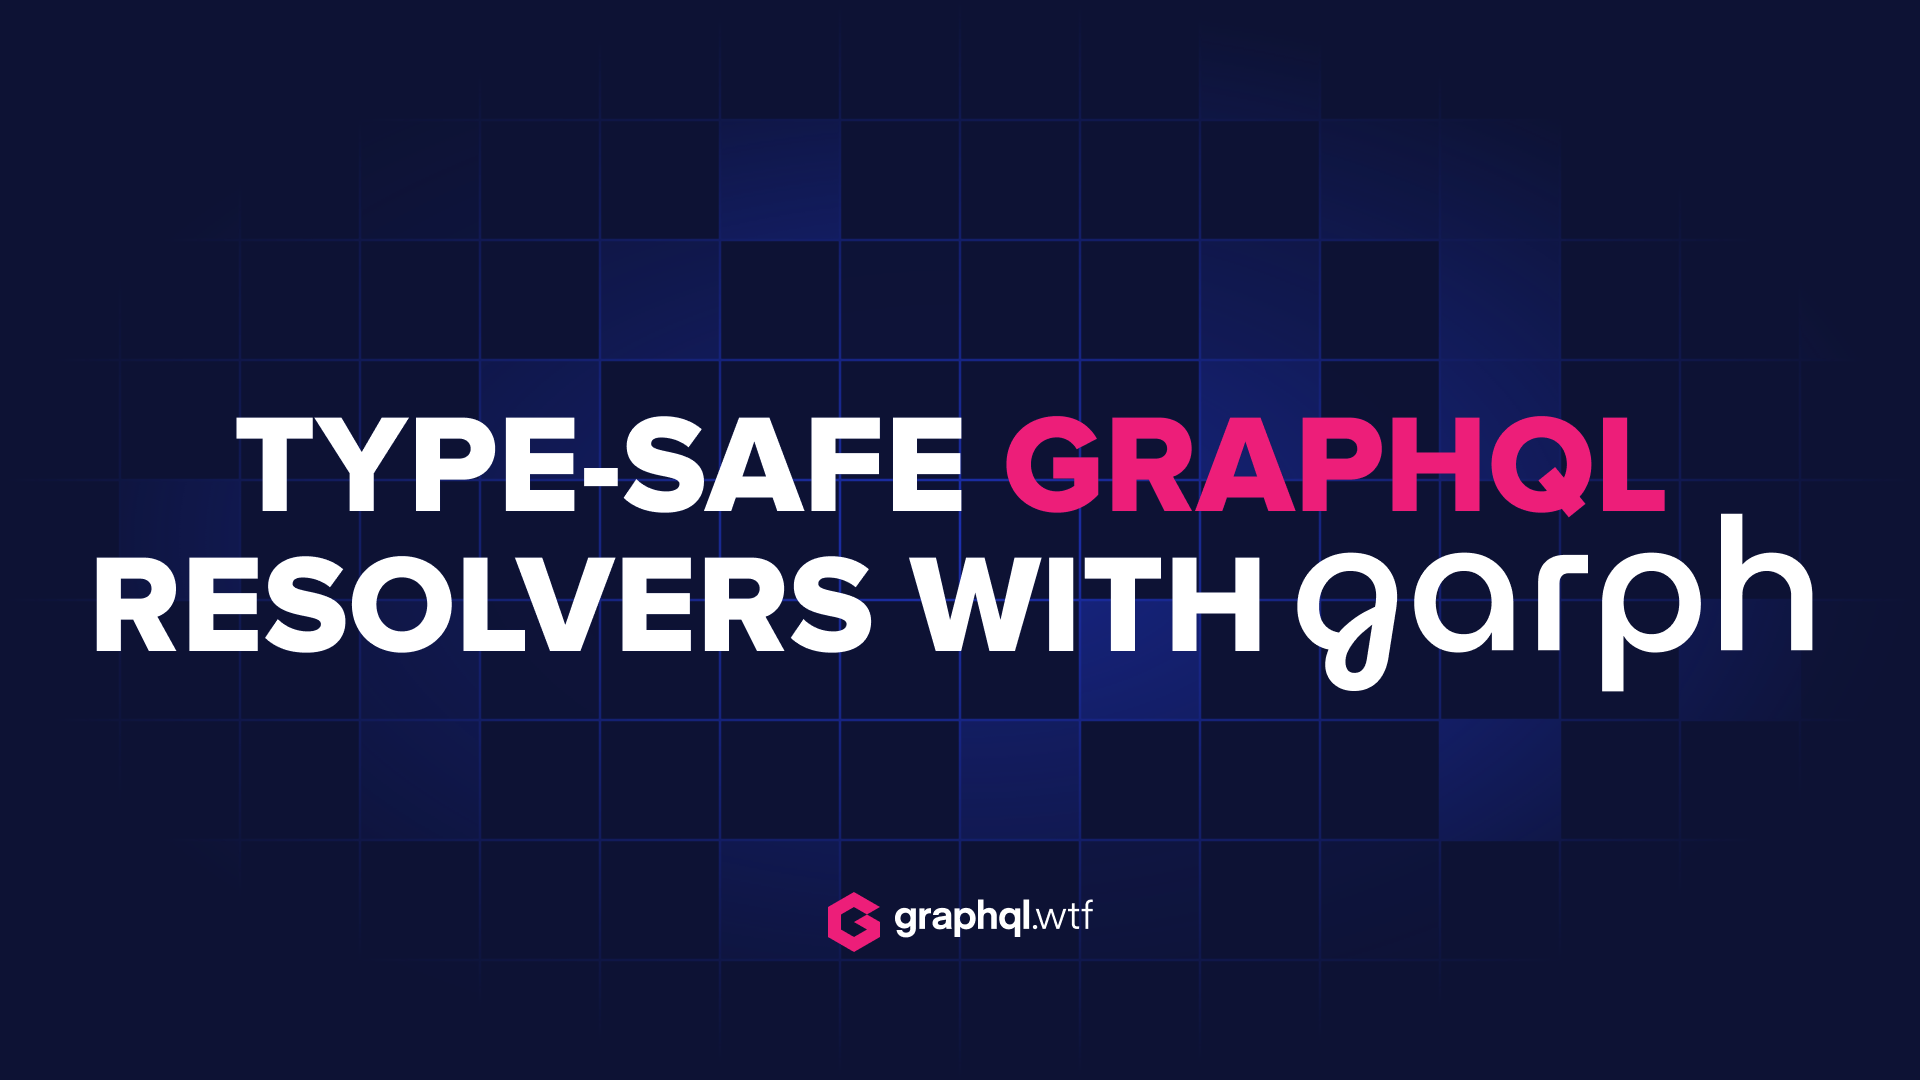 Type-safe GraphQL resolvers with garph